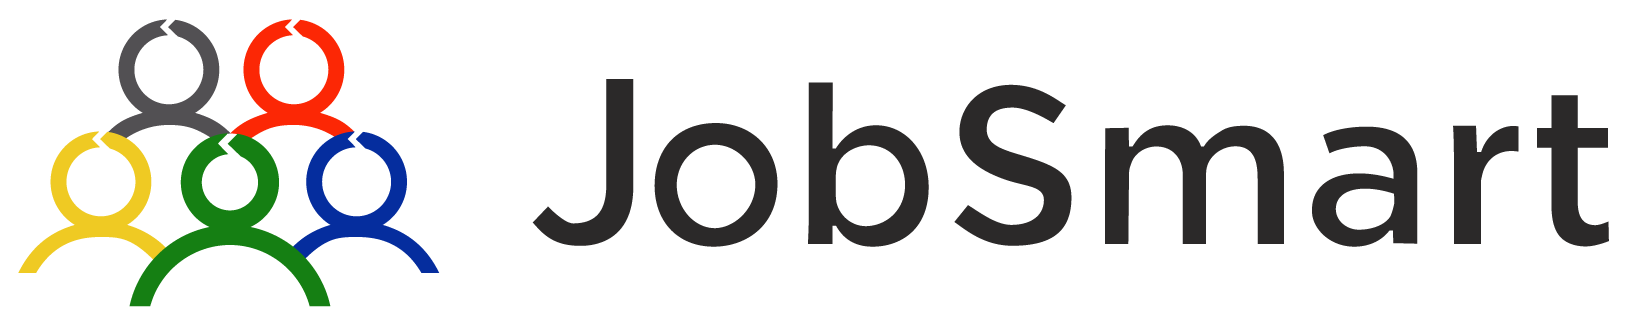 Jobsmart Logo